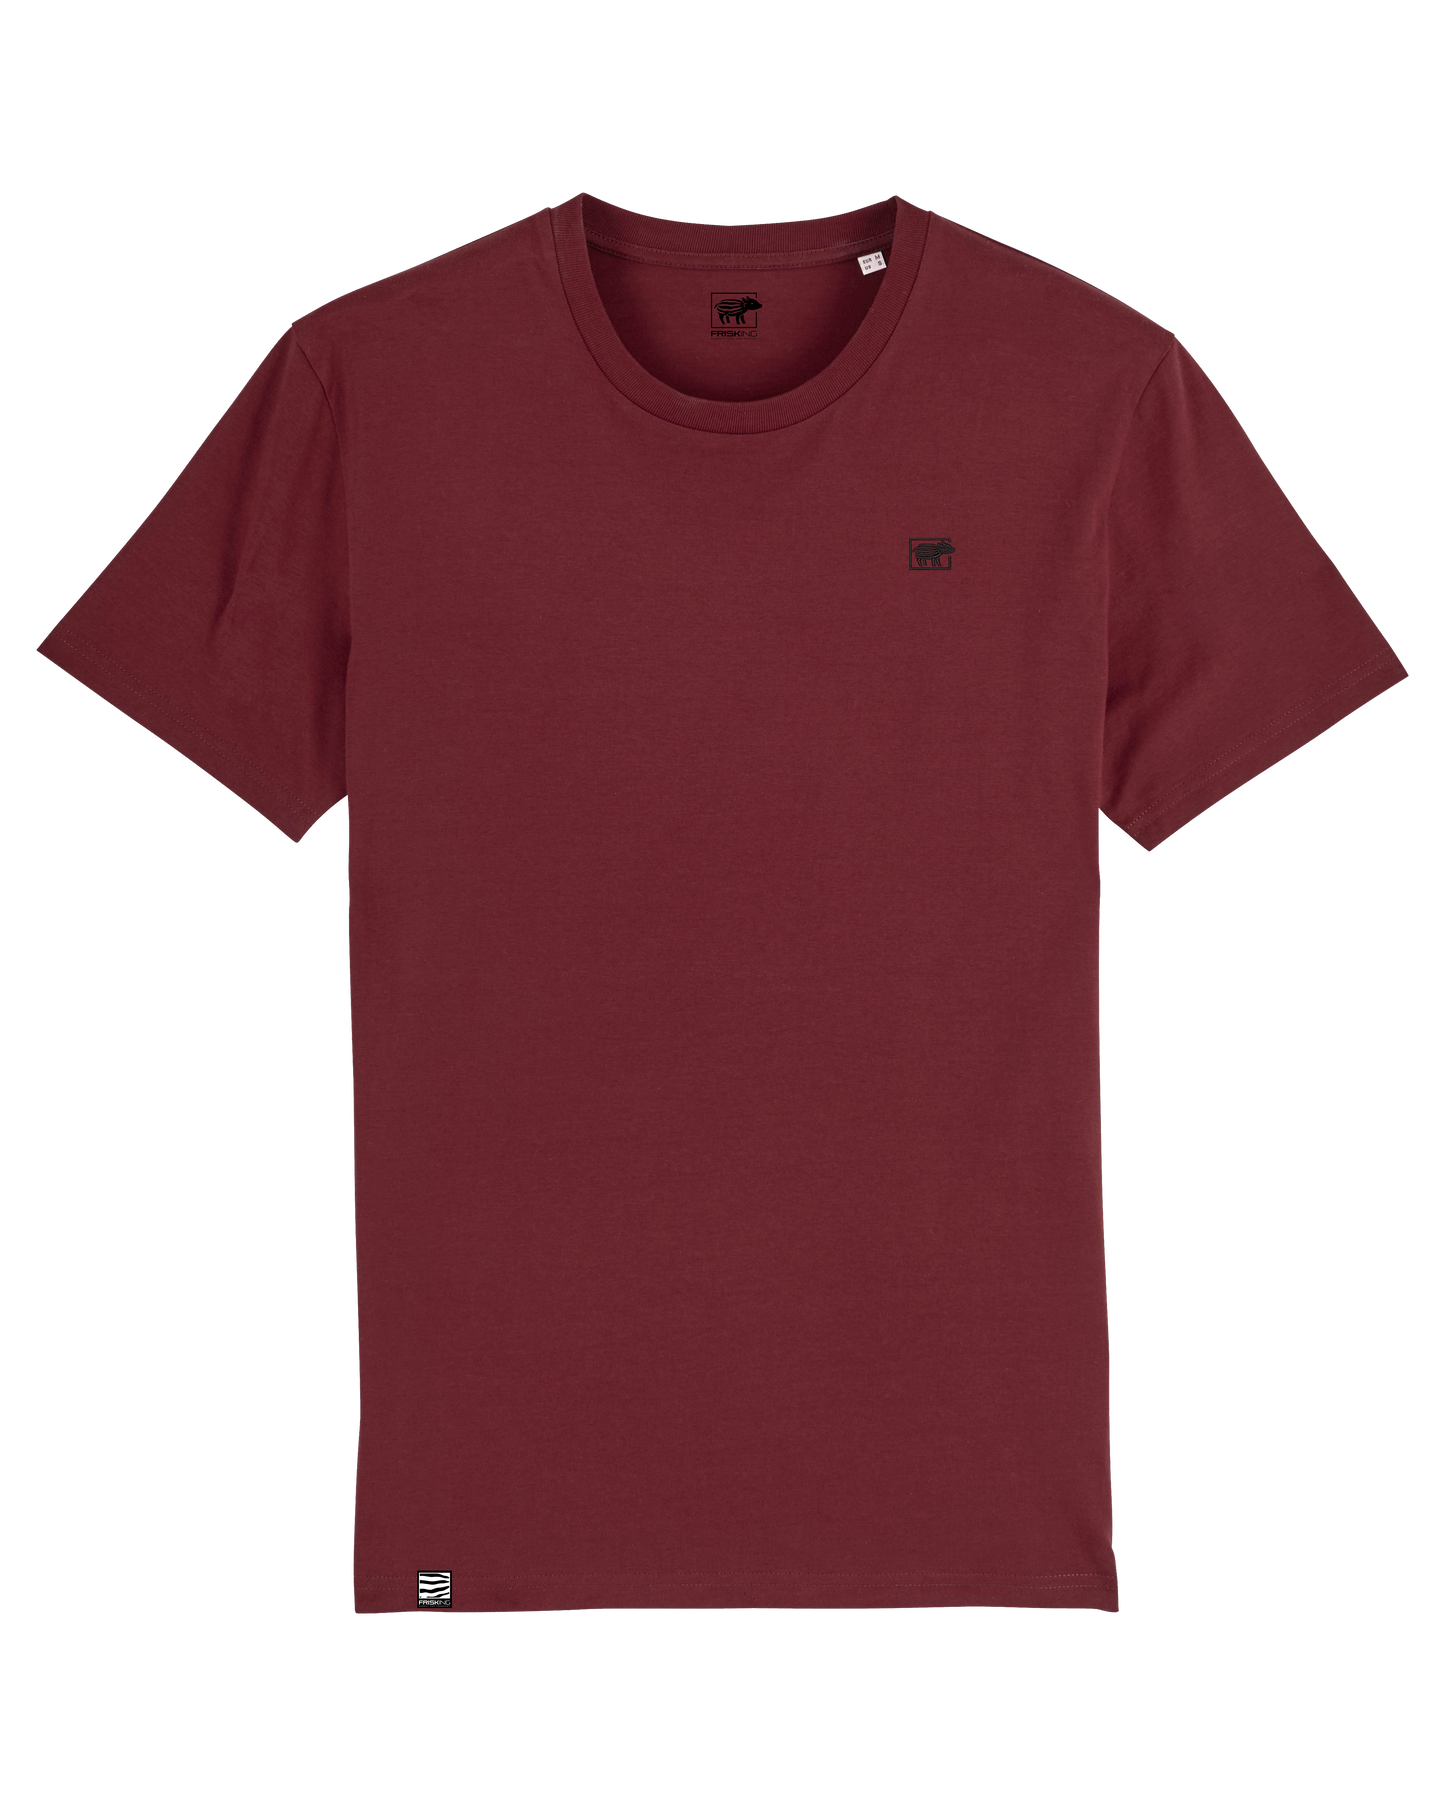 FRISKING Unisex T-Shirt "casual", Shirt, simply the freshest, streetwear